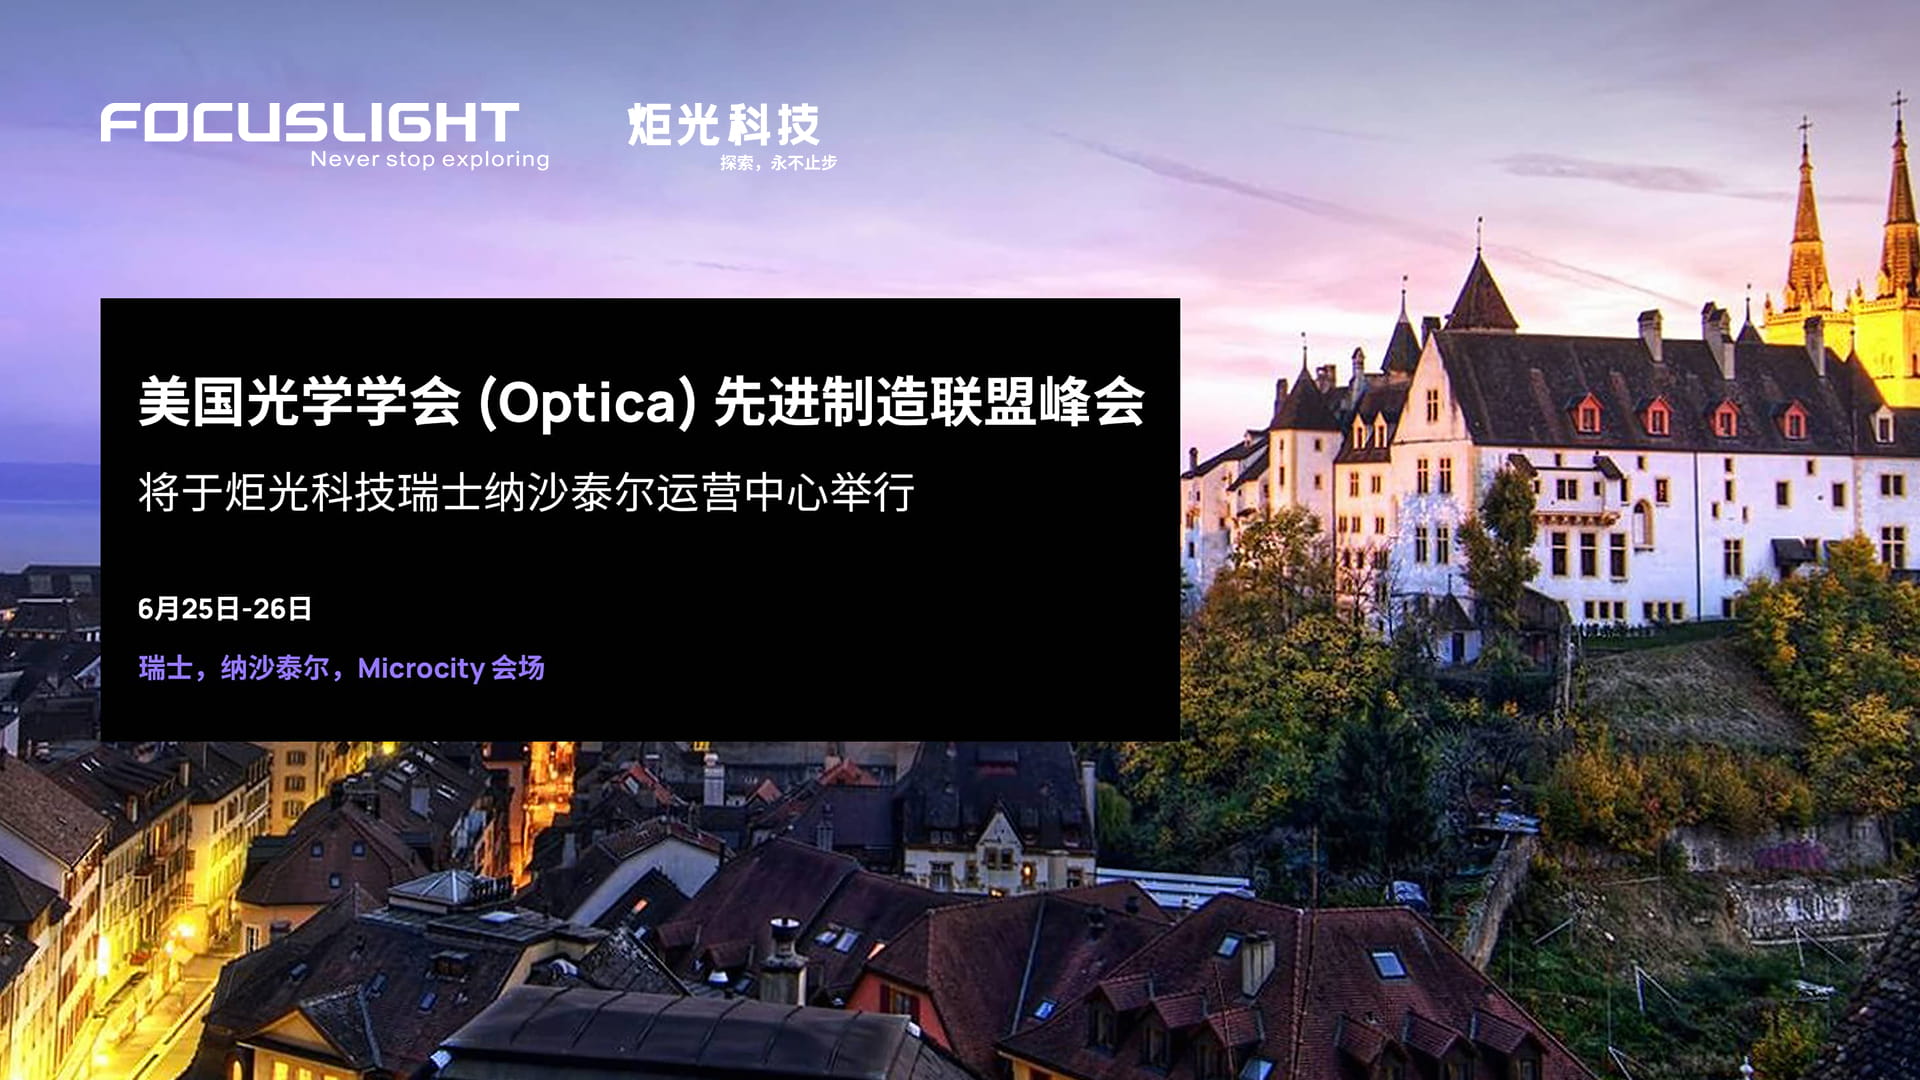 Optica Advanced Manufacturing Alliance at Focuslight Switzerland